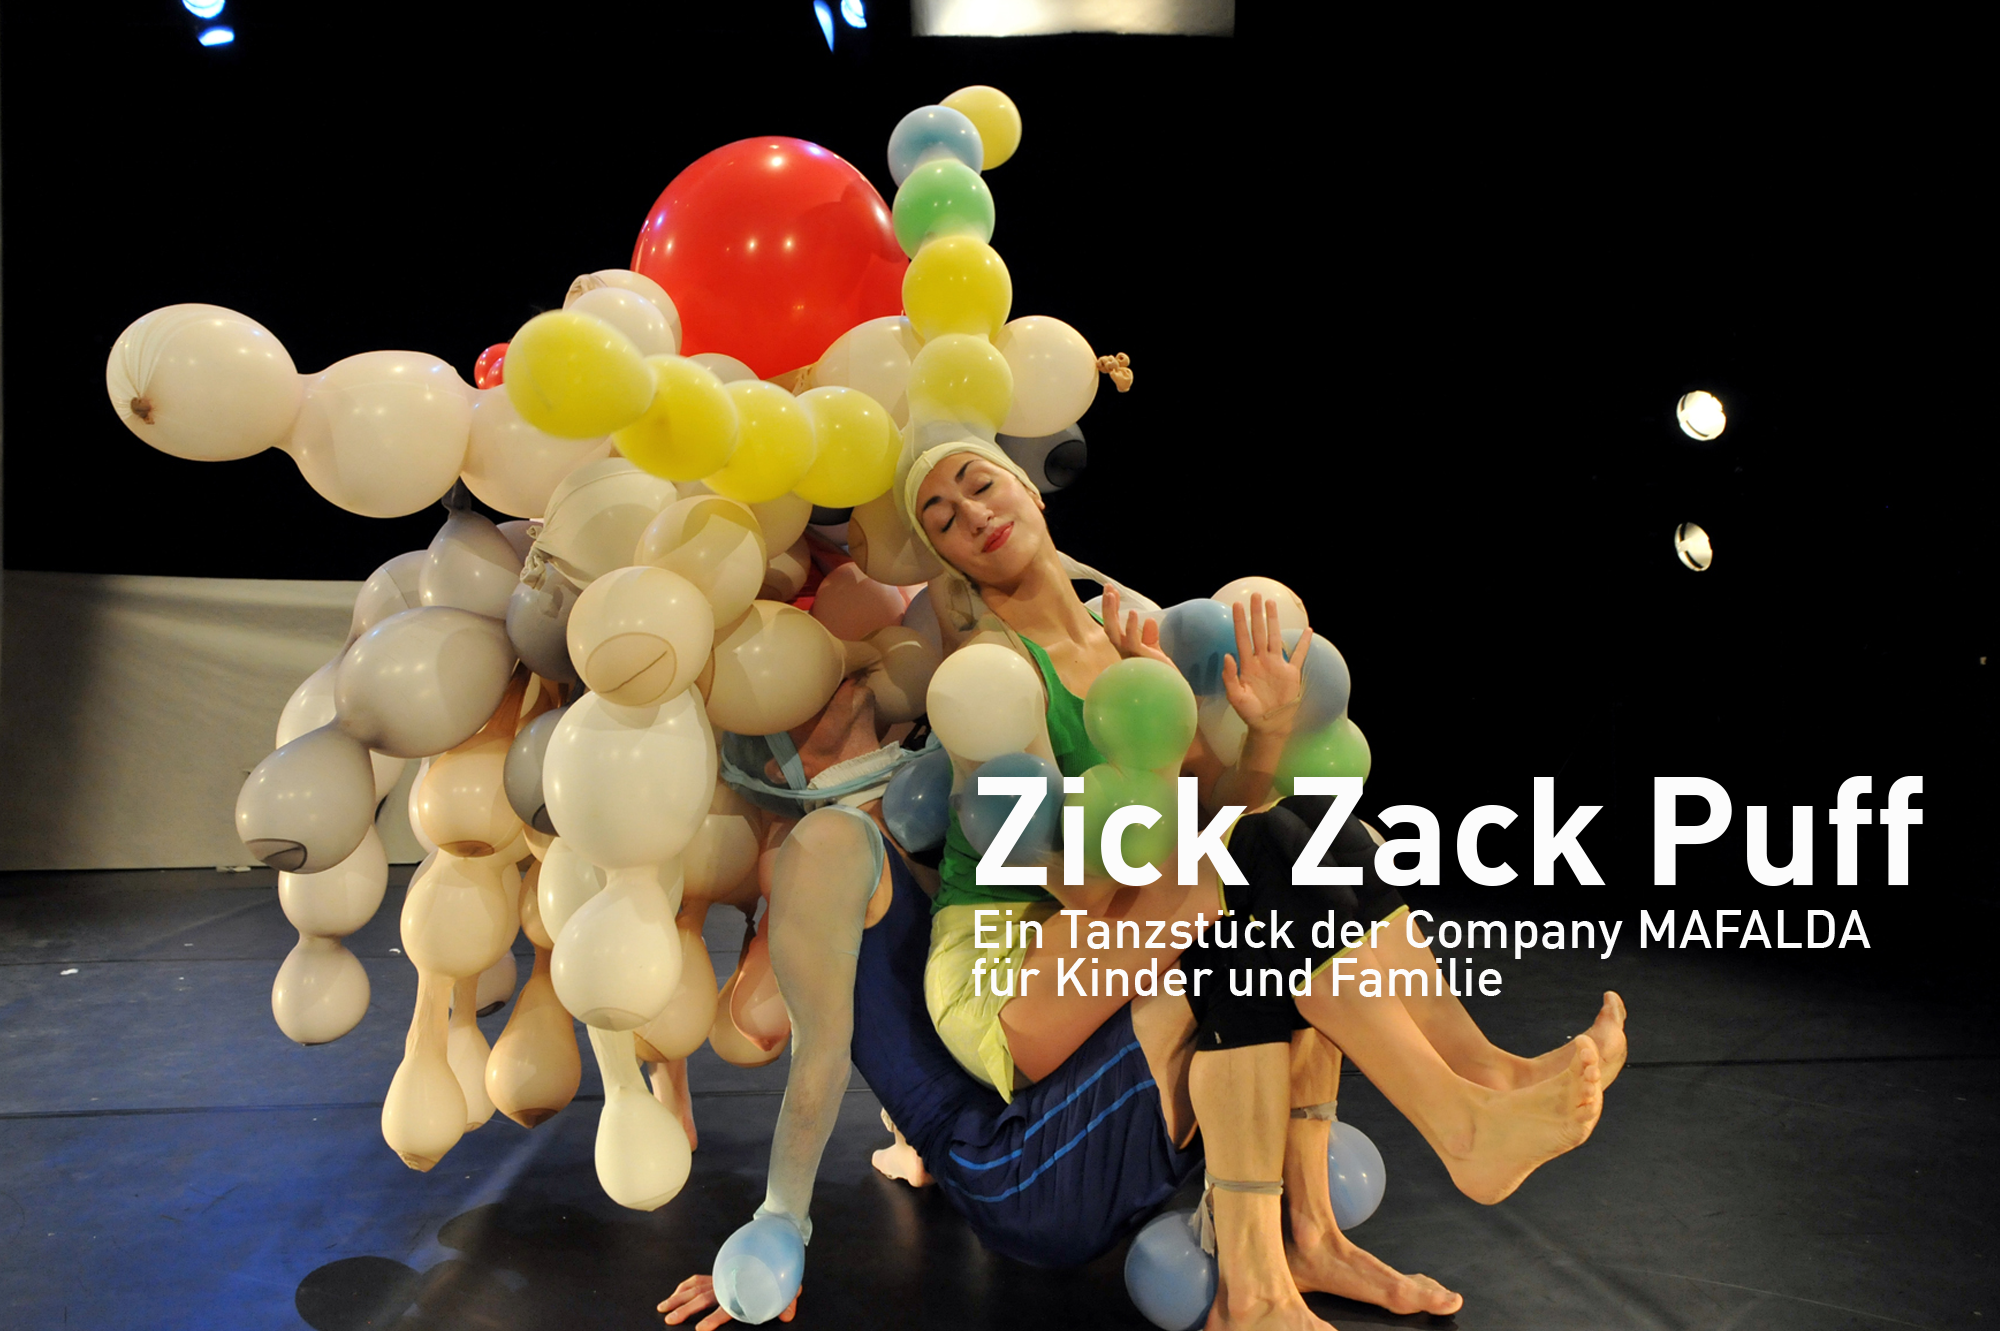 Zick Zack Puff